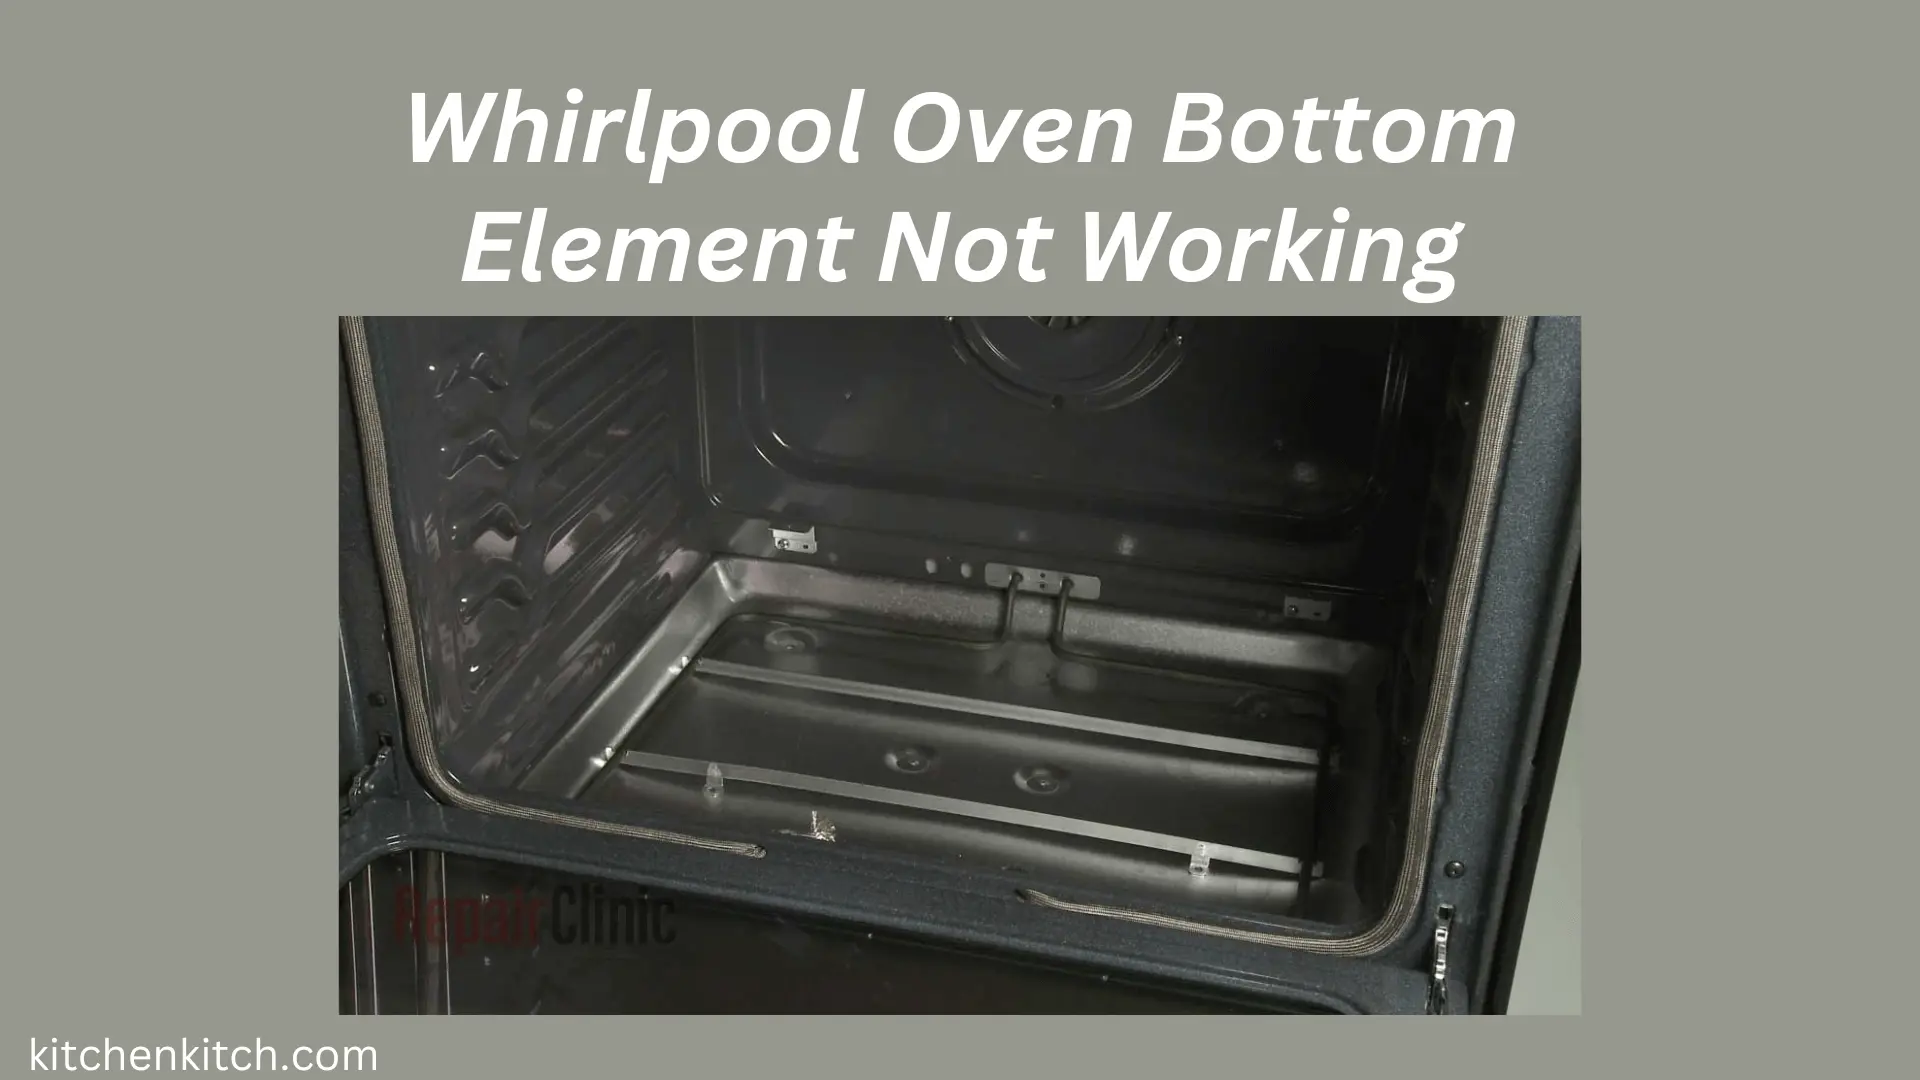 Whirlpool Oven Bottom Element Not Working